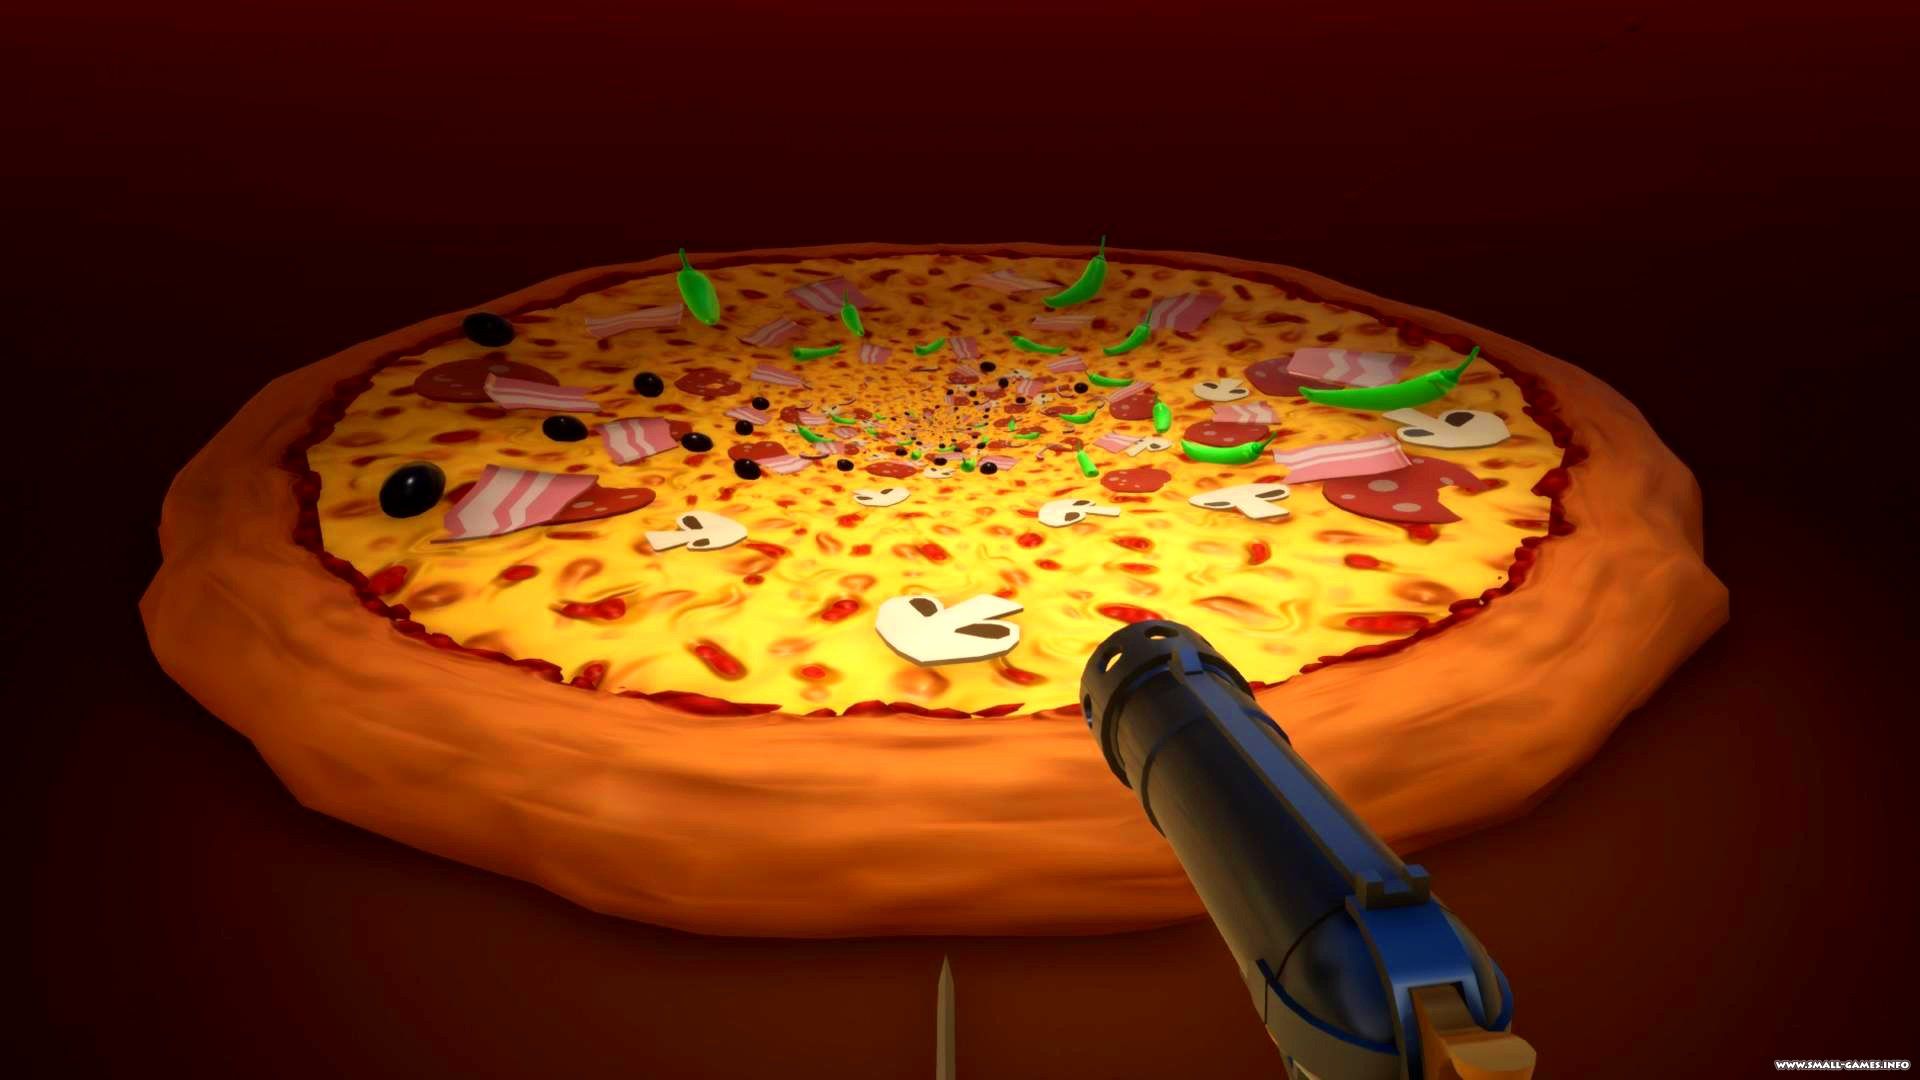 infinite pizza game no download